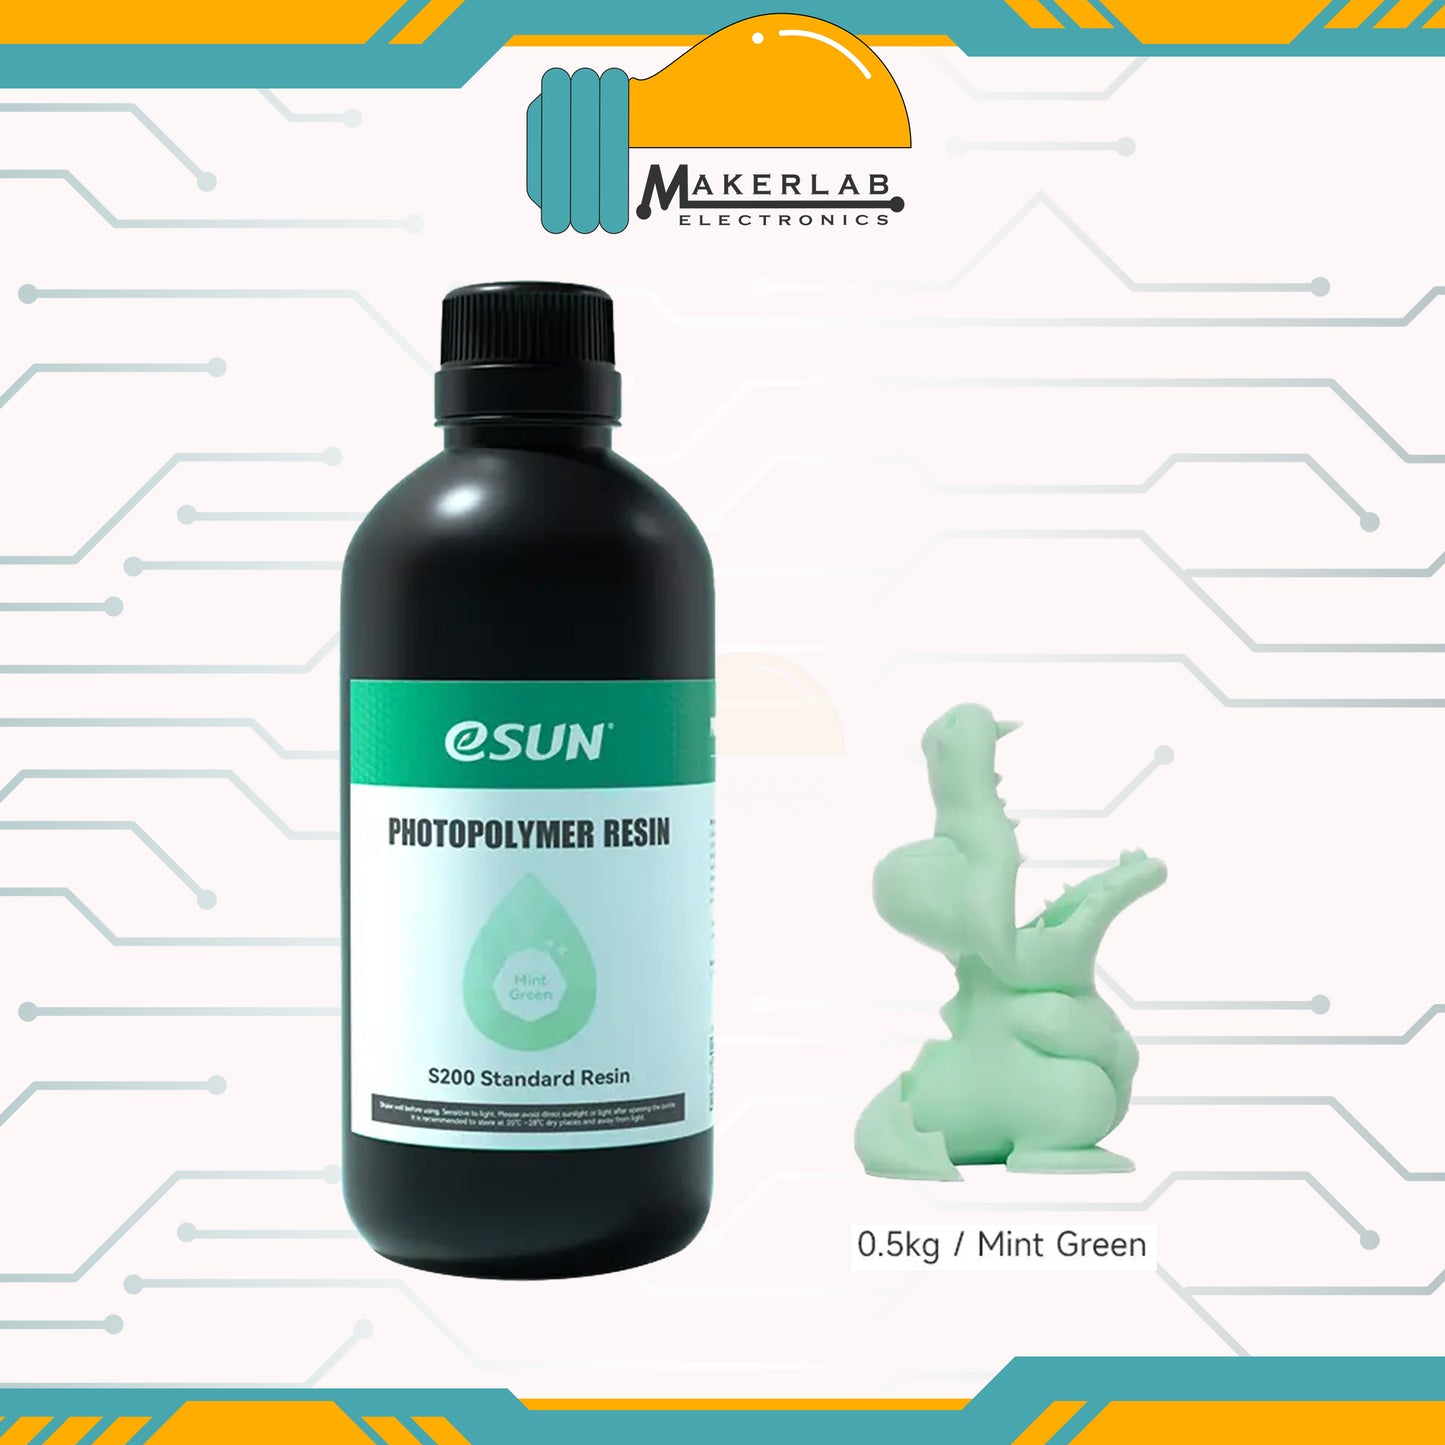 eSUN S200 Standard Resin UV 405nm LCD Photopolymer Resin for Photon UV Curing Liquid 3D Resin 0.5KG